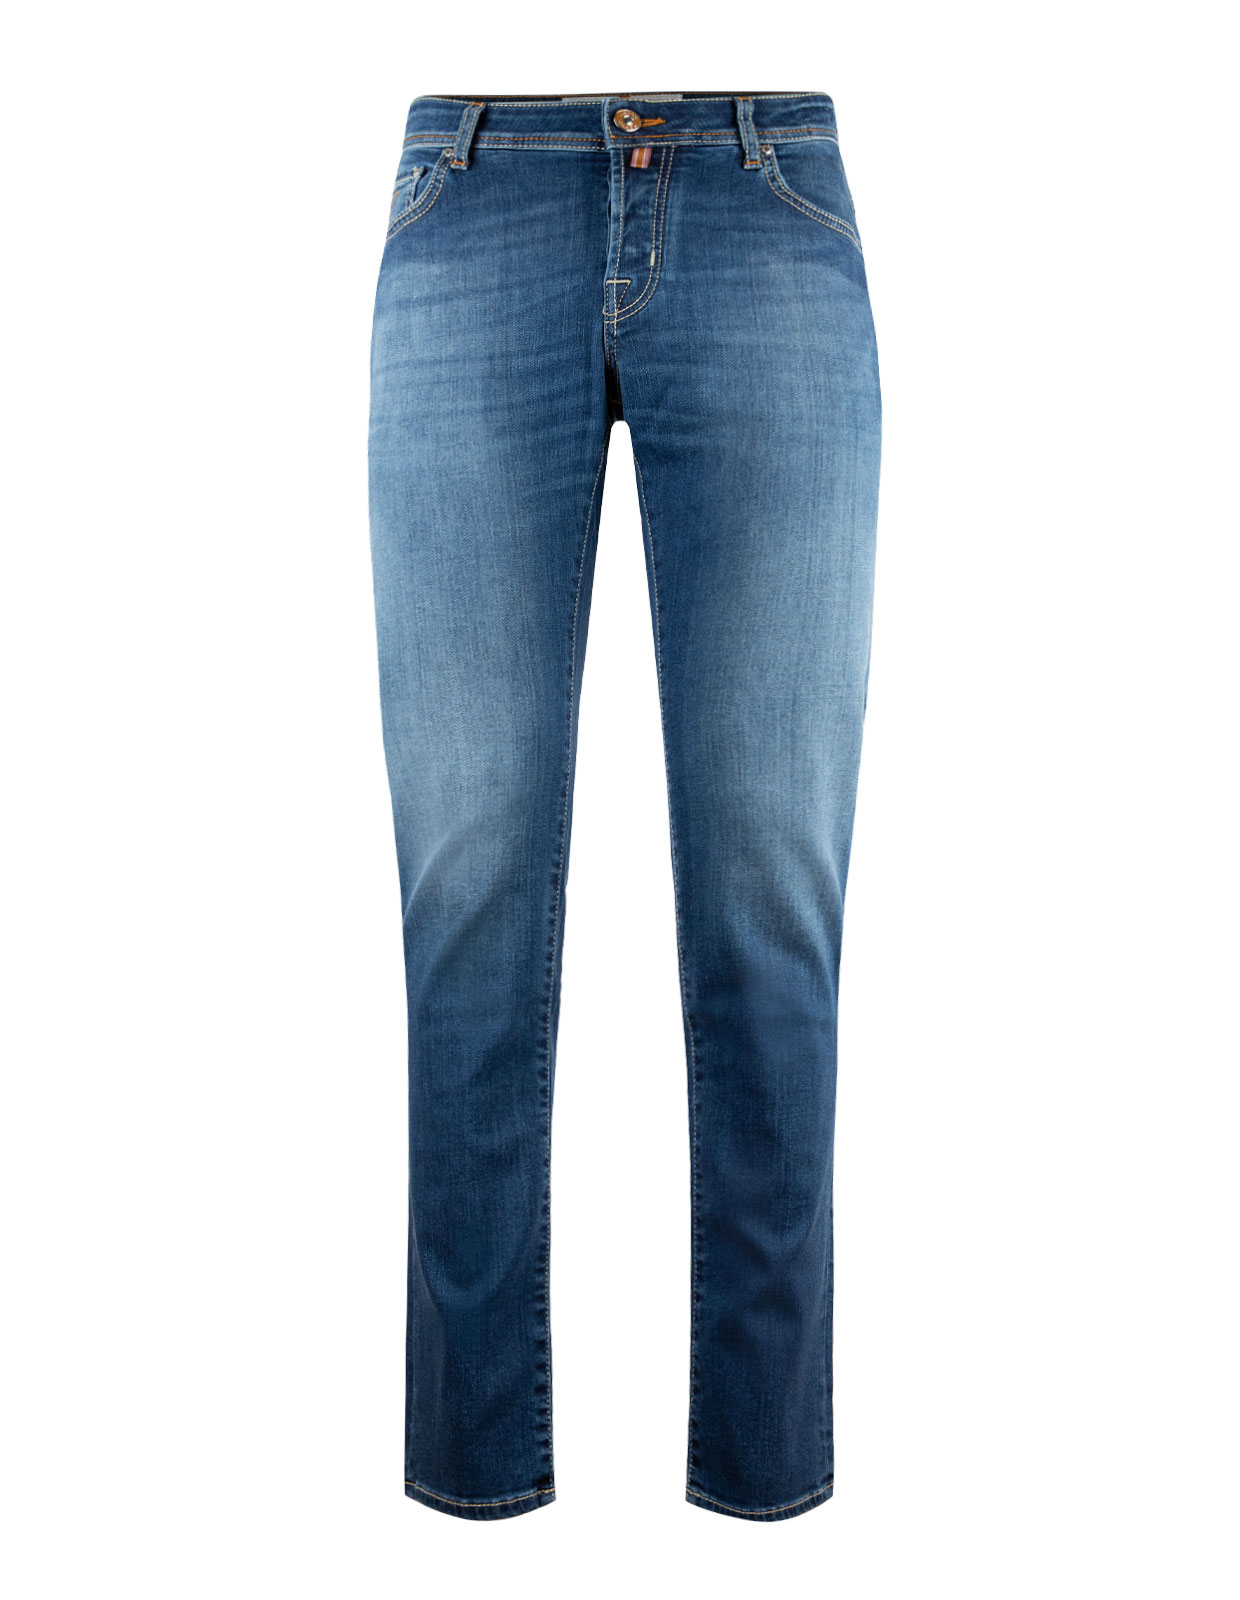 Nick J622 Jeans Denim Stretch Easy Blue